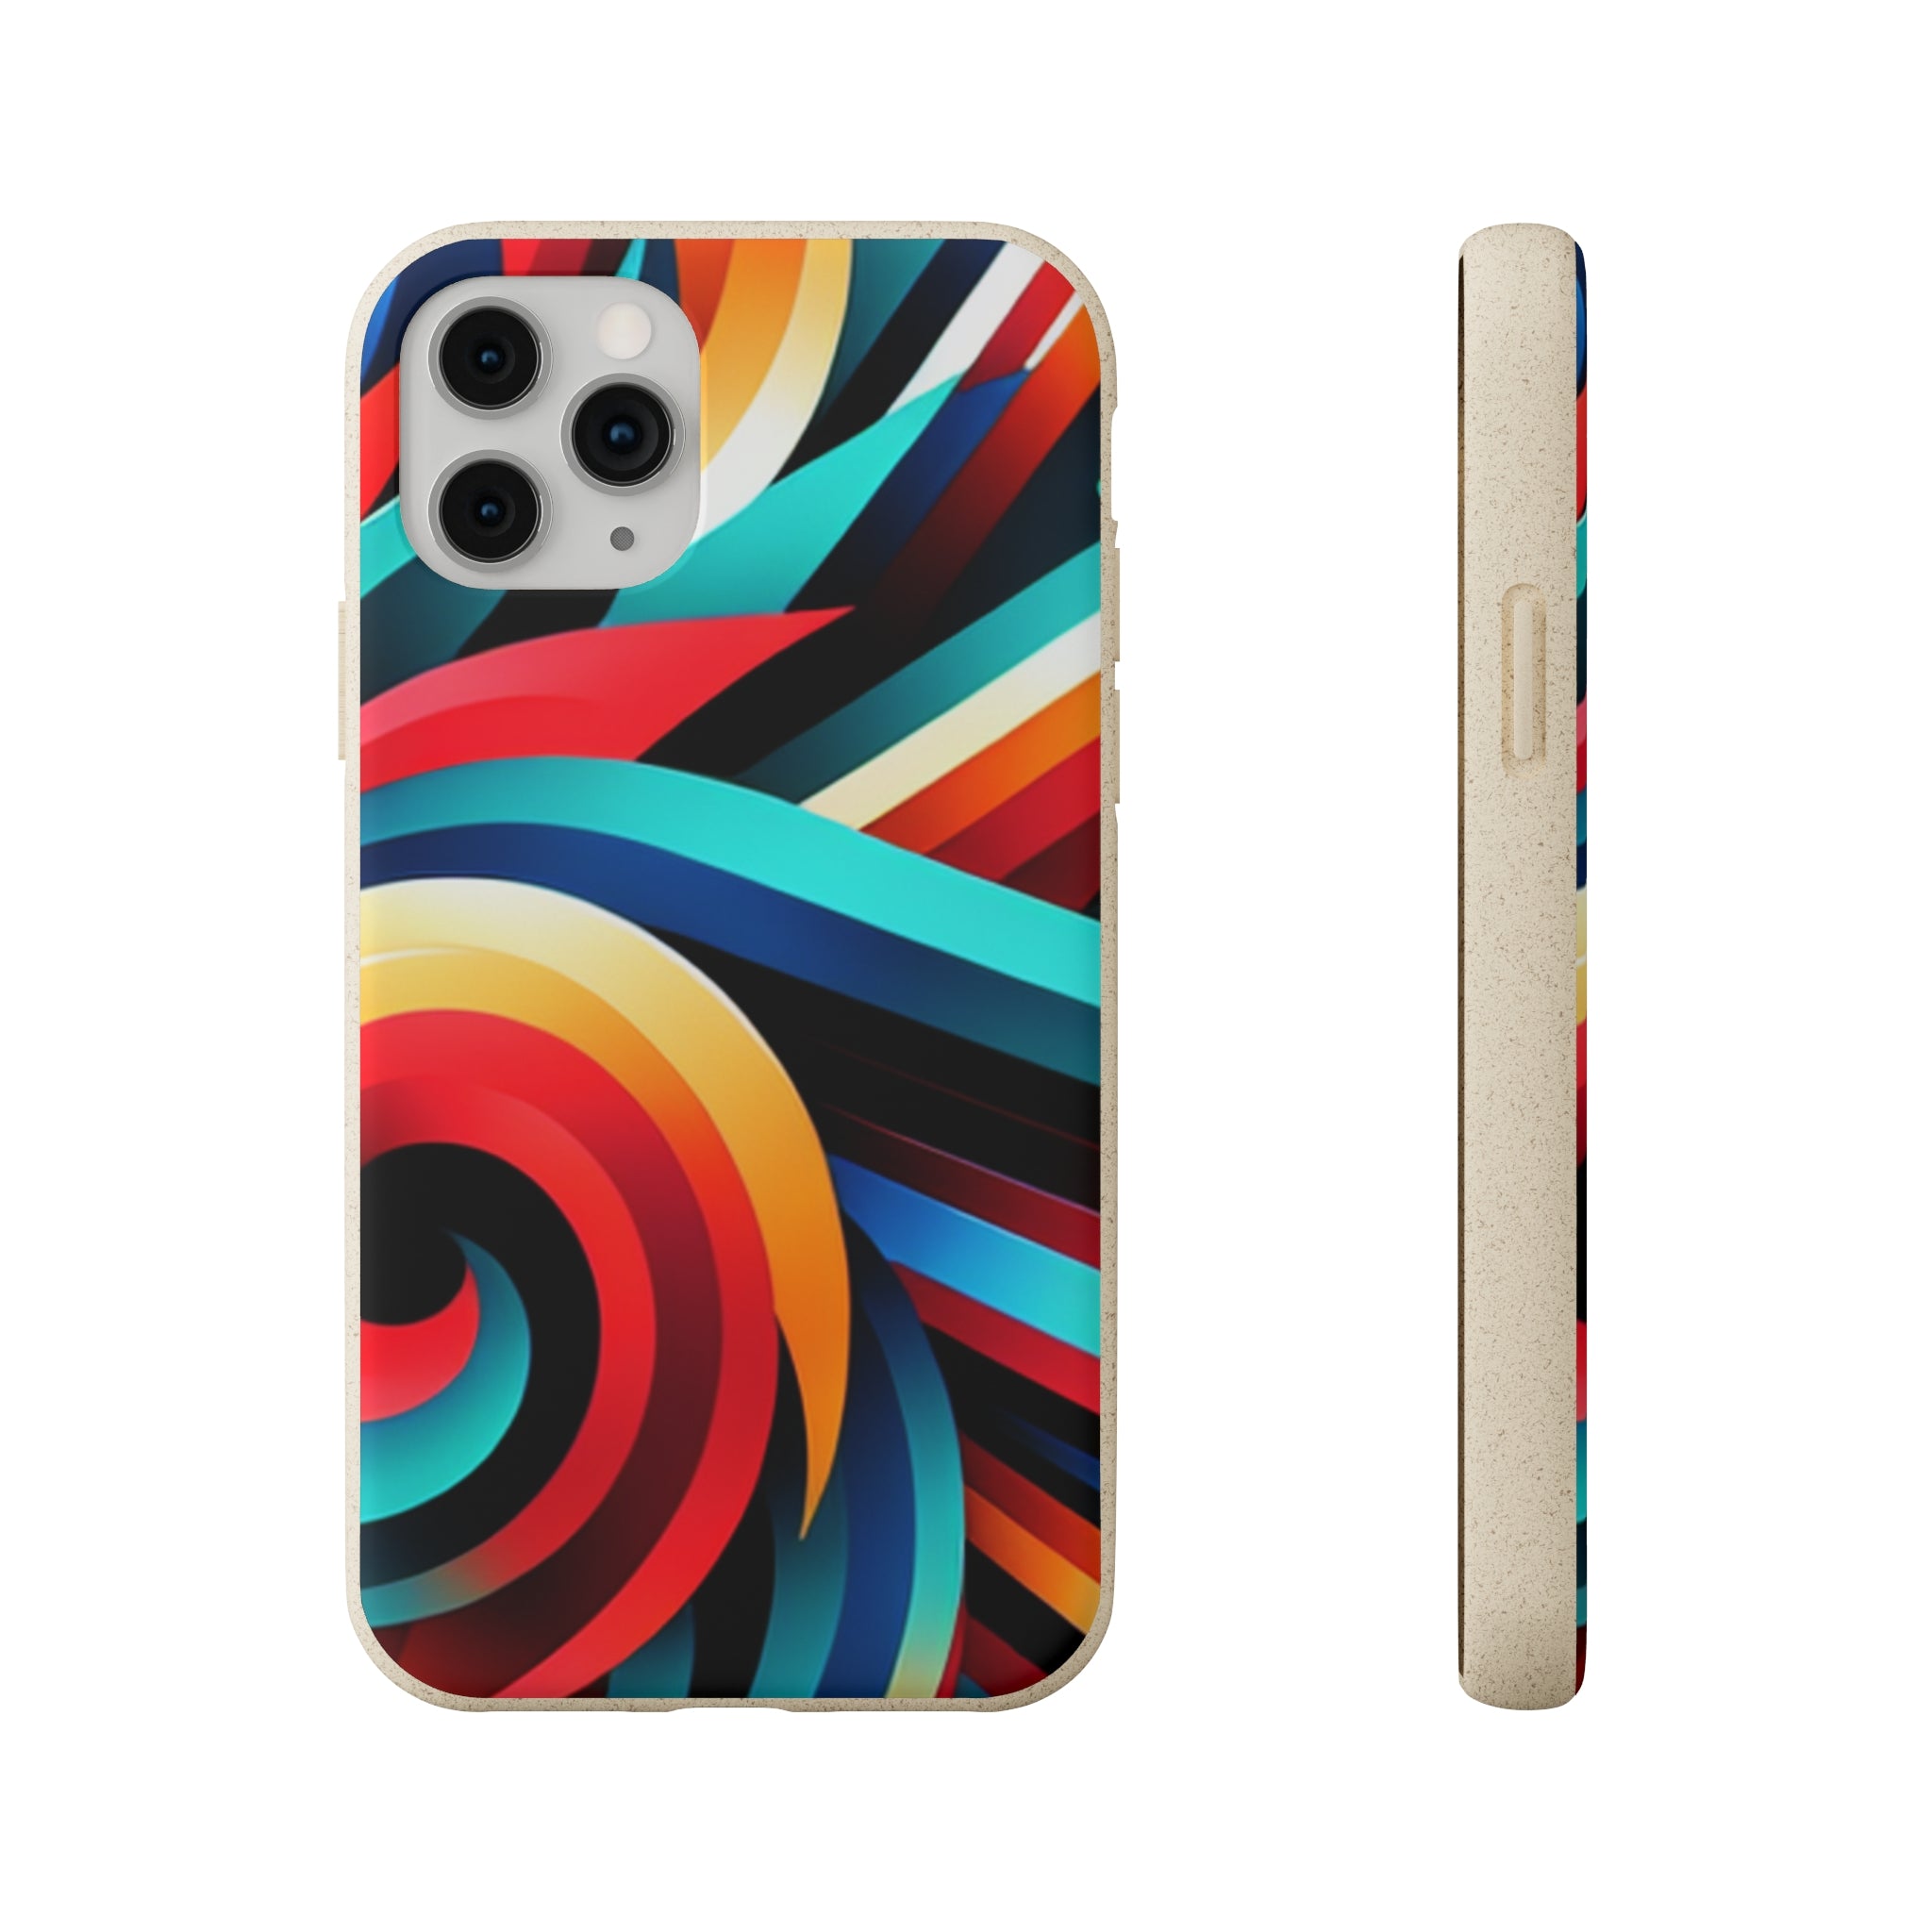 Hailey Bair - Biodegradable iPhone Cases